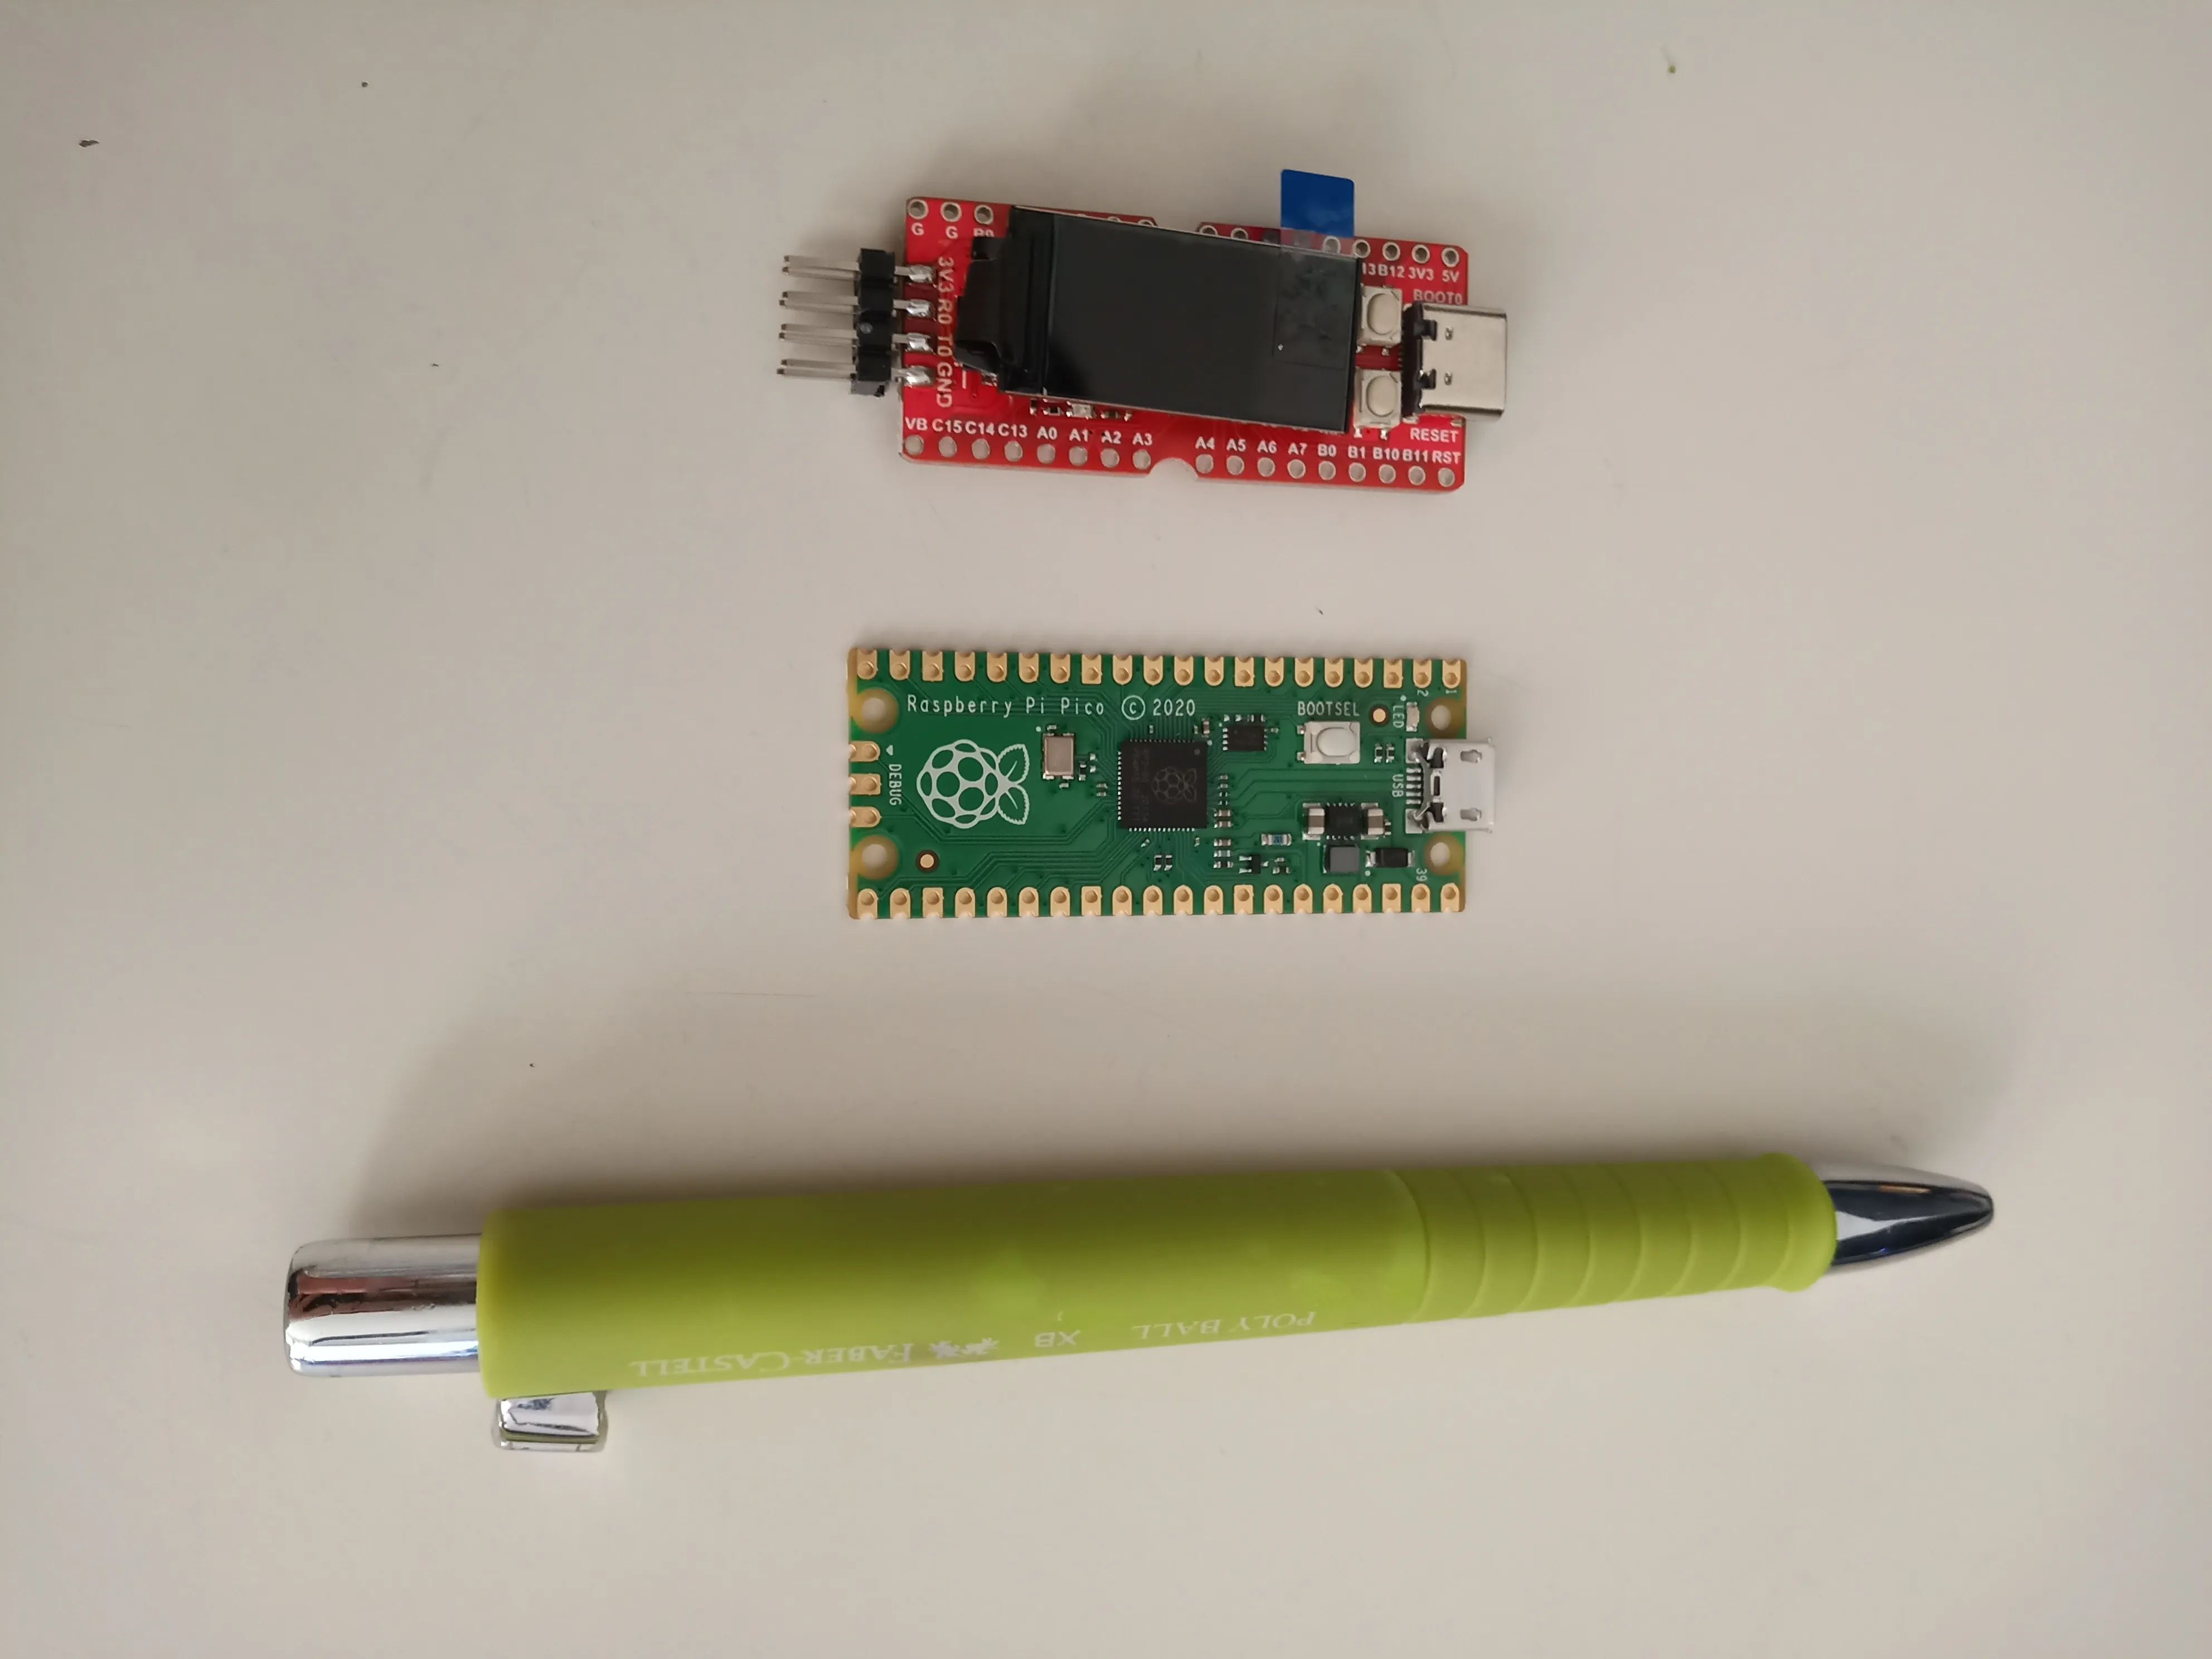 The Longan Nano, Raspberry Pi Pico and a pen for scale.